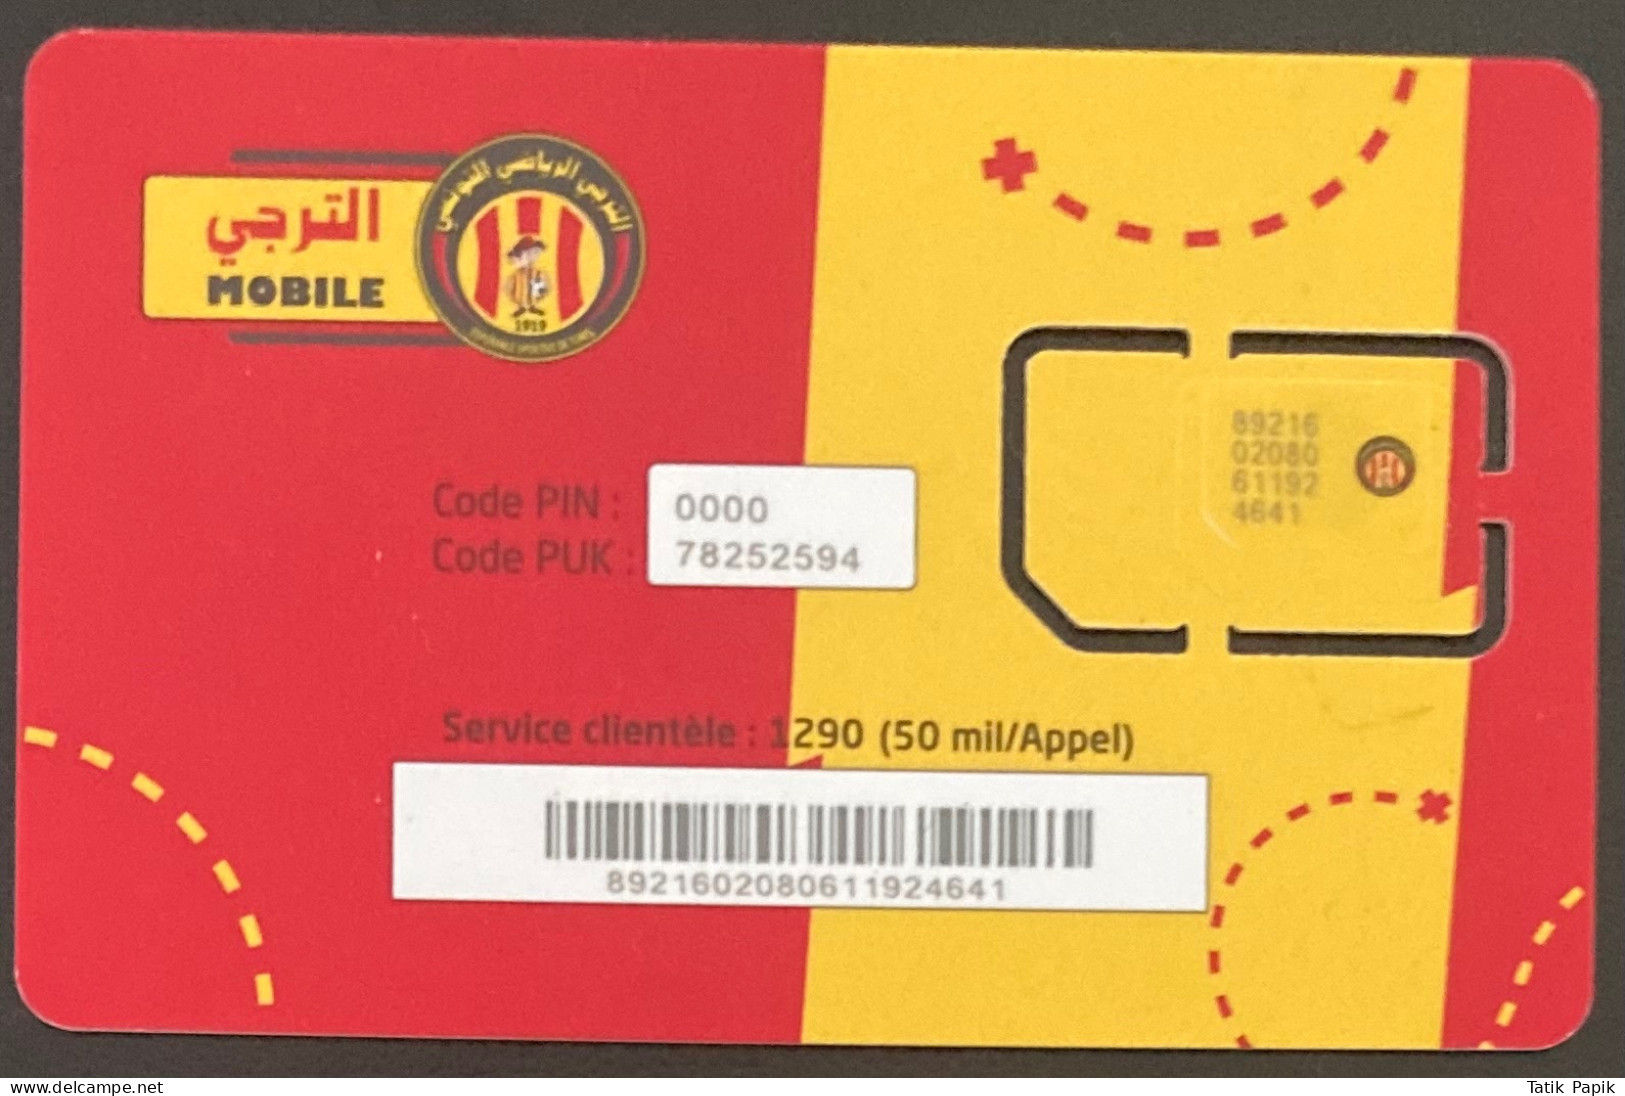 Tunisie Tunisia New SIM GSM Card Telecom Football Esperance Calcio Soccer Red Yellow Blood & Gold 3G 4G 5G MOBILE - Tunisie